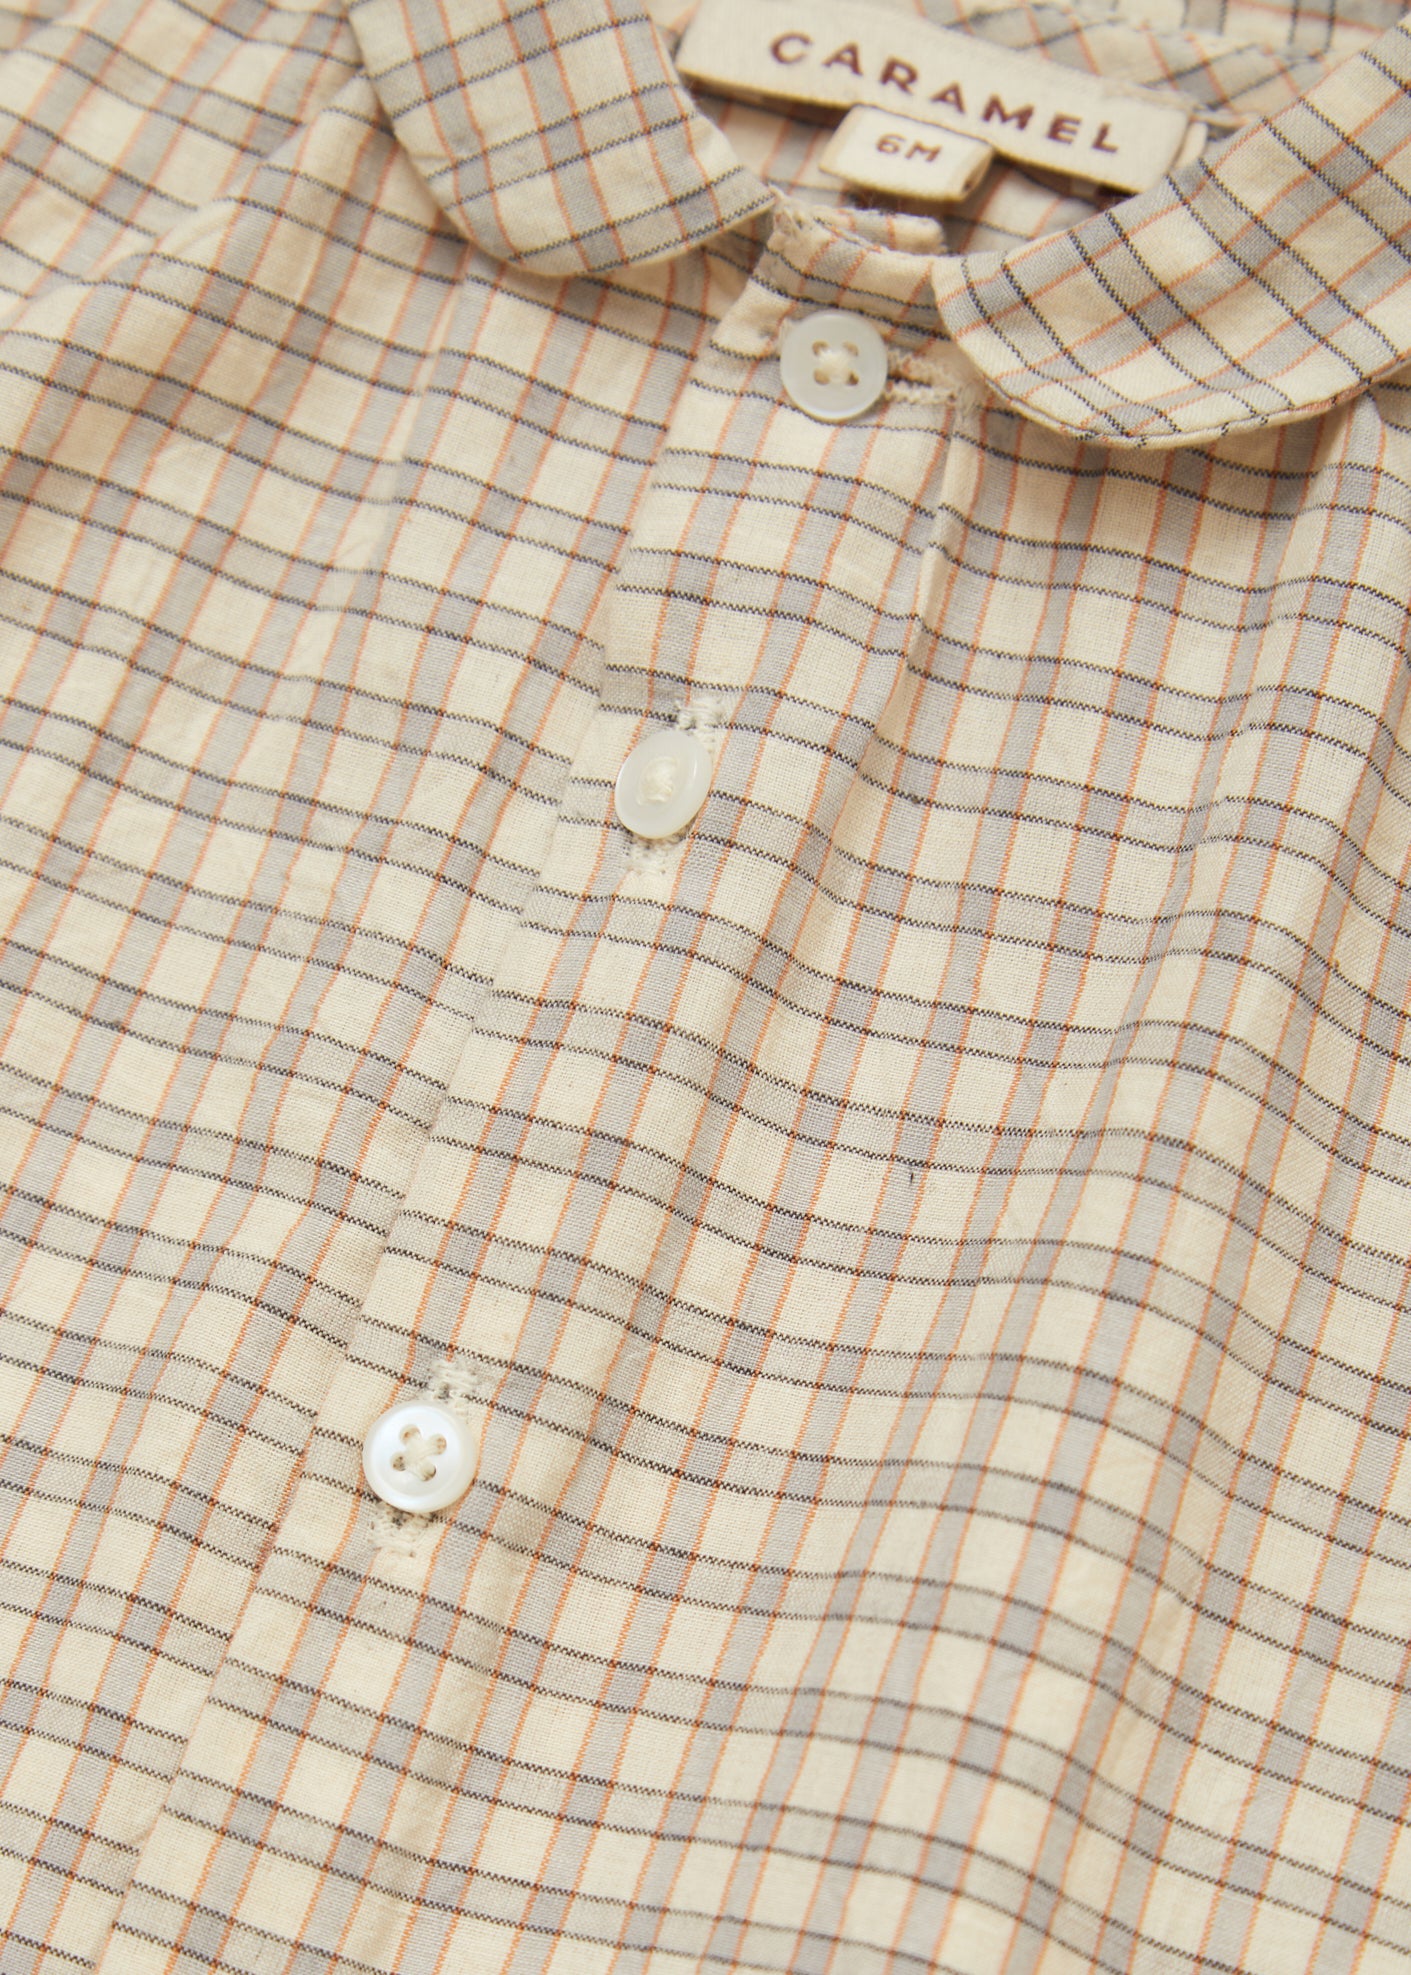 Baby Designer Tops - Aloe Baby Shirt - Brown Check